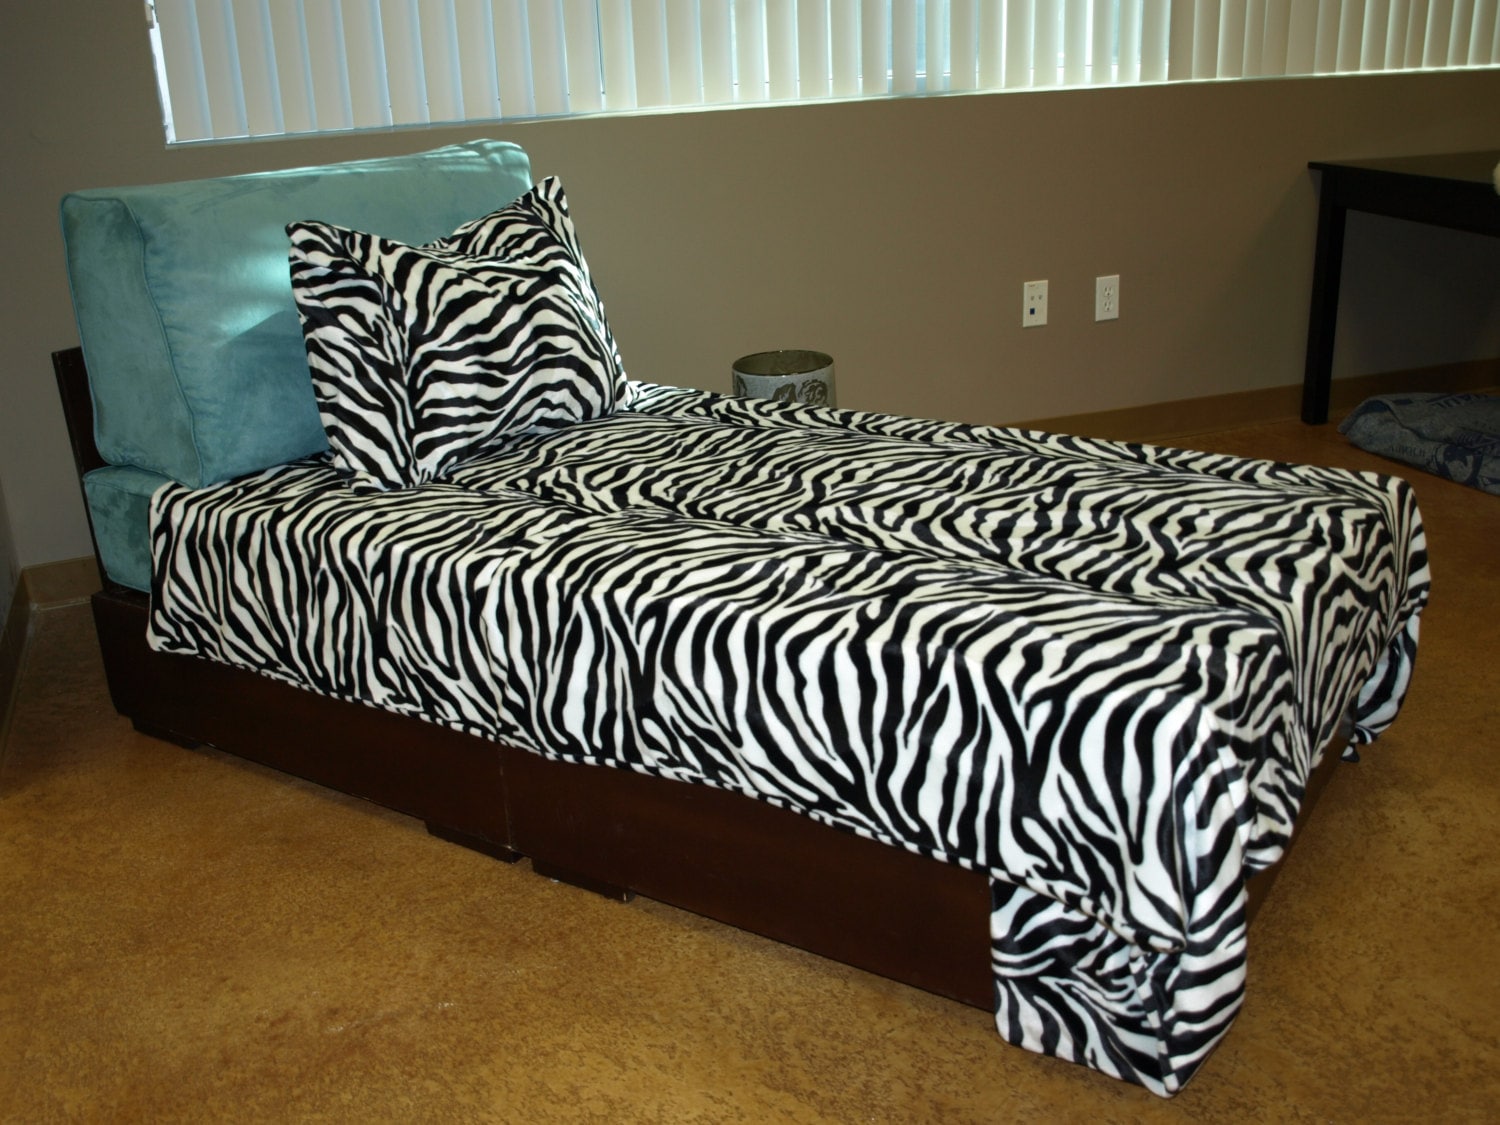 Zebra Coverlet Bedspread Twin Or, Zebra Print Bedding Twin Xl